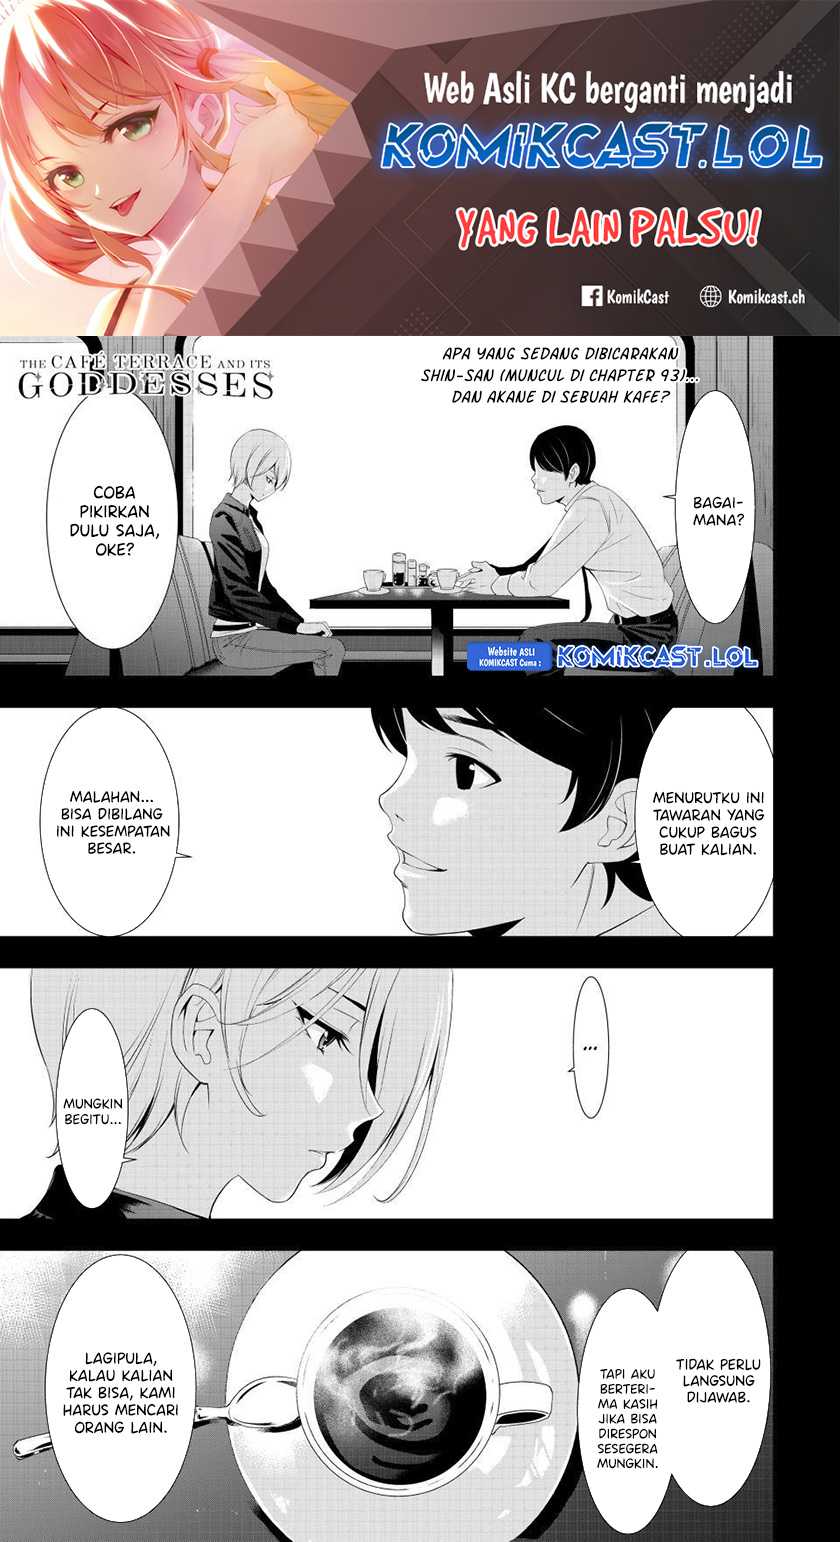 Megami no Kafeterasu (Goddess Café Terrace) Chapter 126